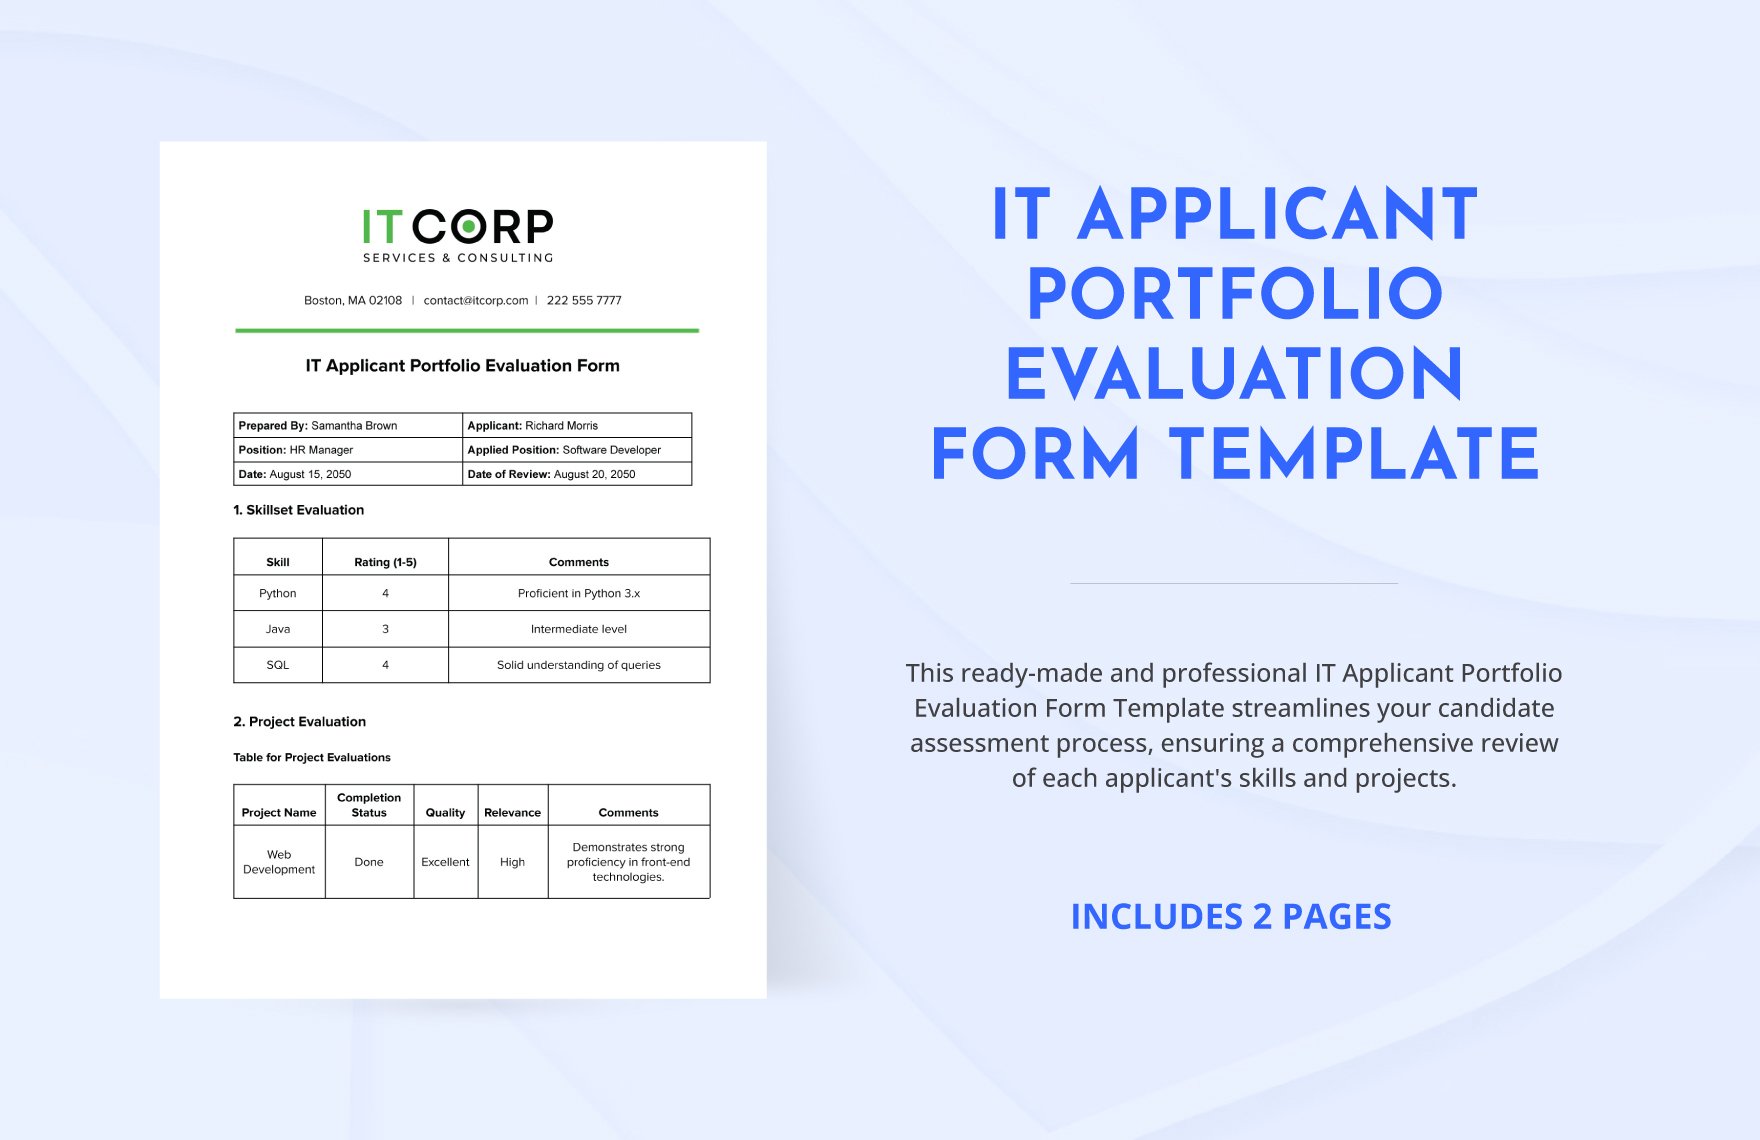 IT Applicant Portfolio Evaluation Form Template in Word, Google Docs, PDF